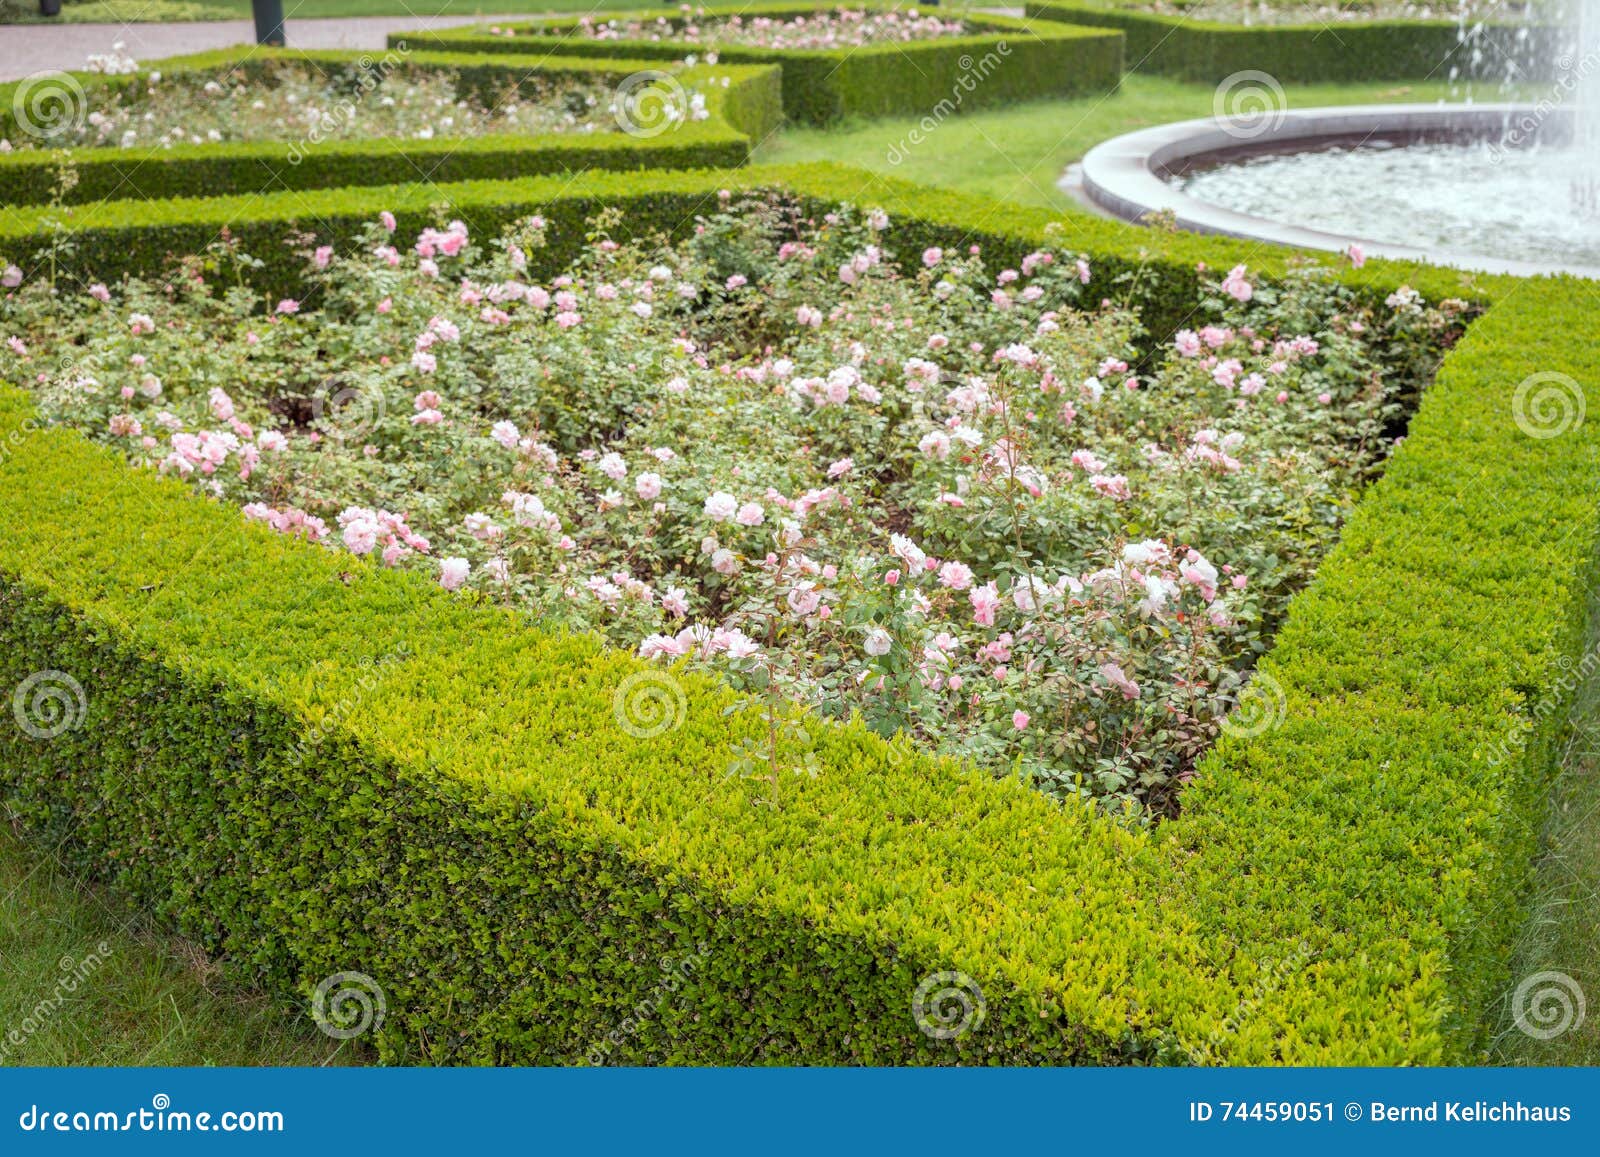 evergreen boxwood hedge adorn a rose garden